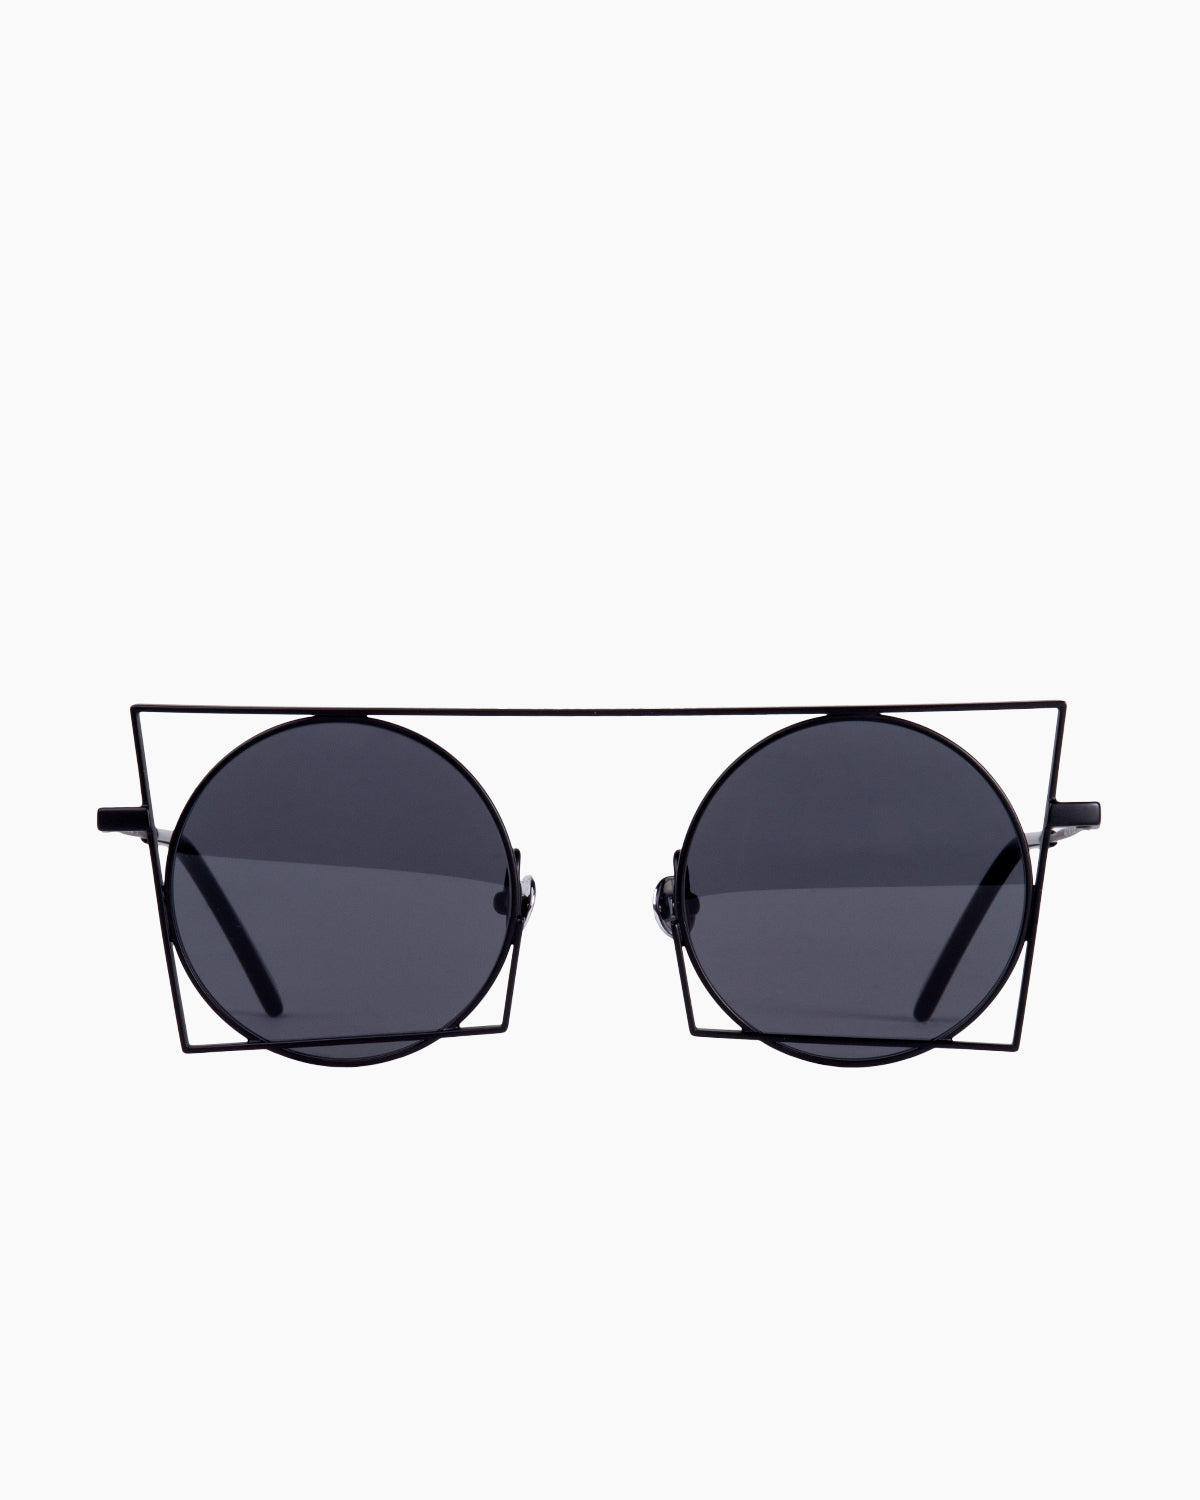 Gamine - FlorentinS - Black | Bar à lunettes